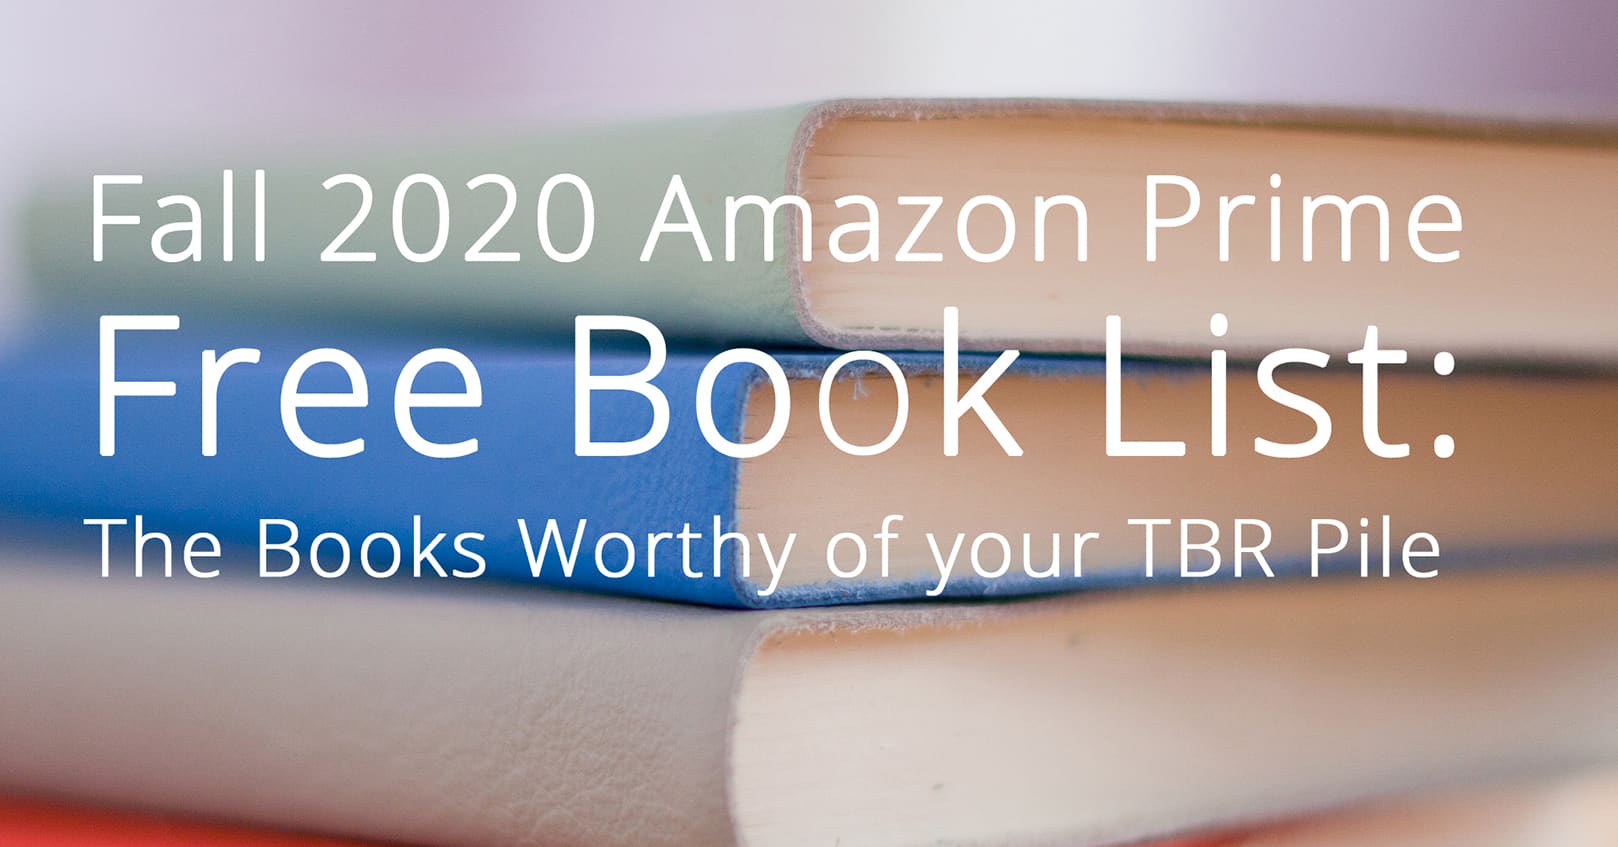 Amazon prime free book list